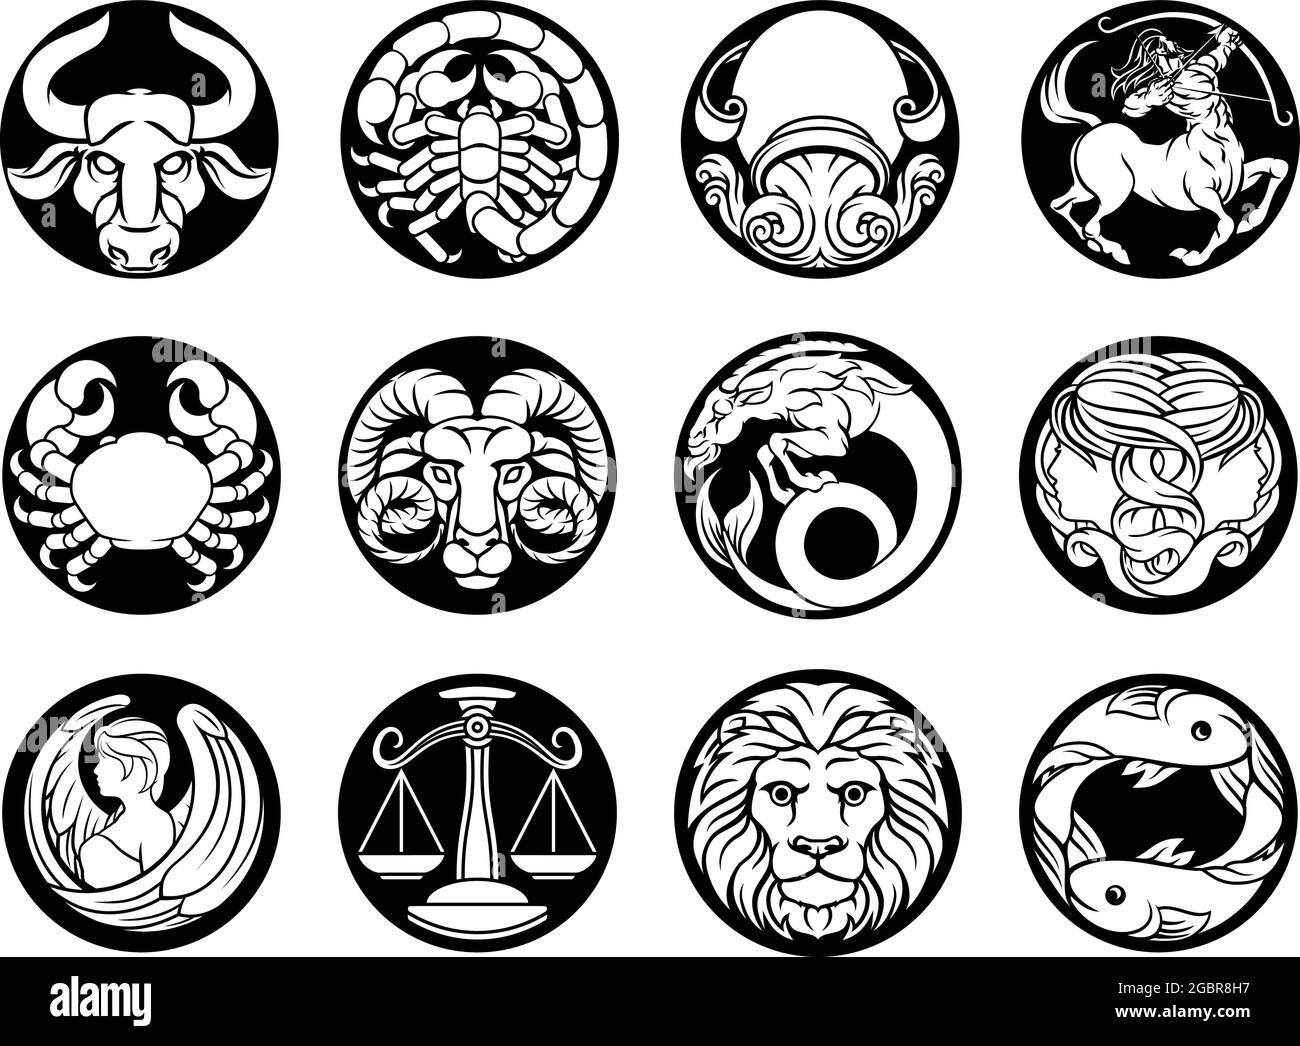 Horoscope zodiac astrology star signs symbols set Stock Vector